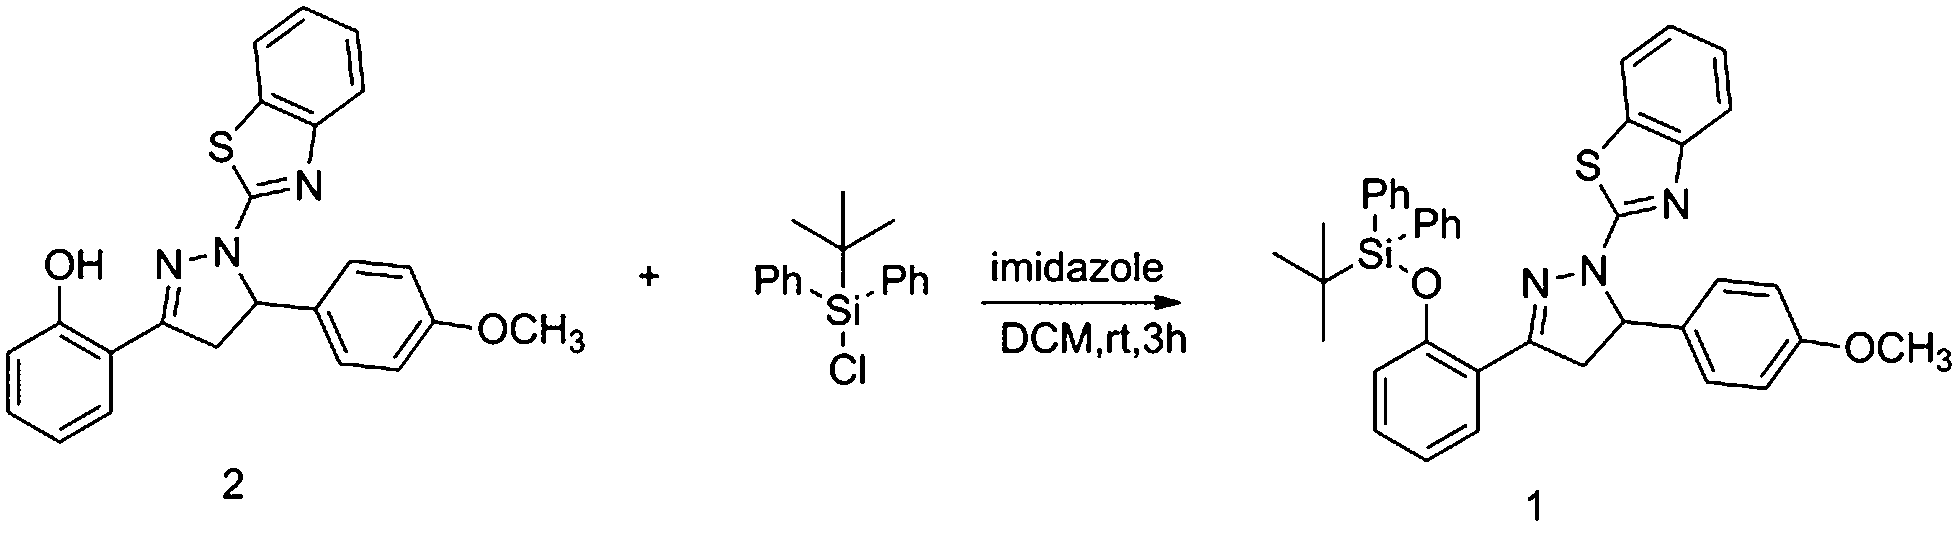 A novel pyrazoline-based fluorescent probe for detecting fluoride 